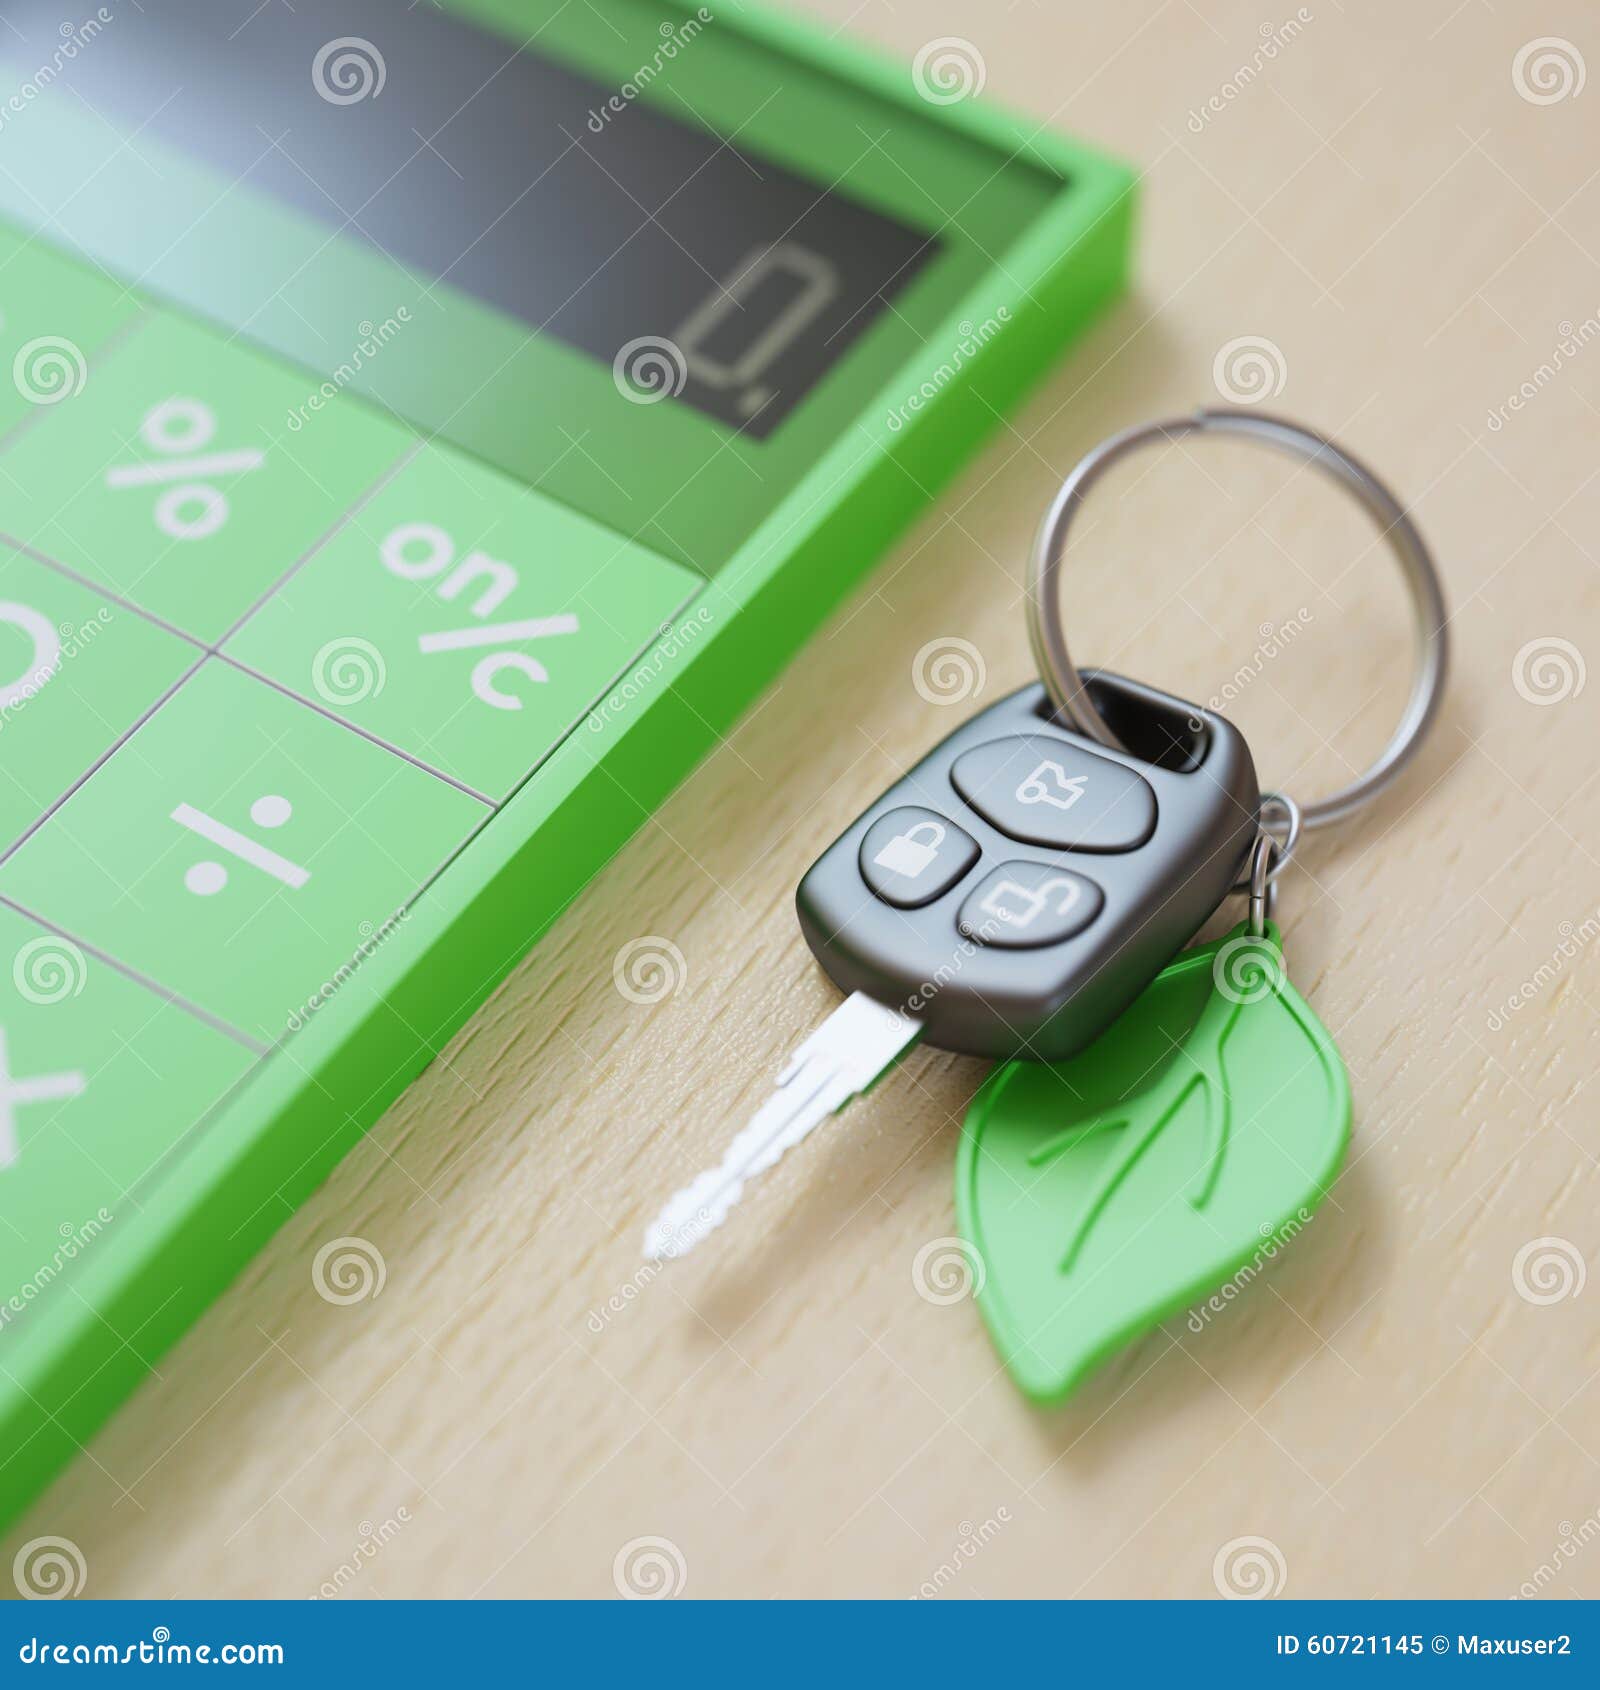 car loan calculation concept with car keys